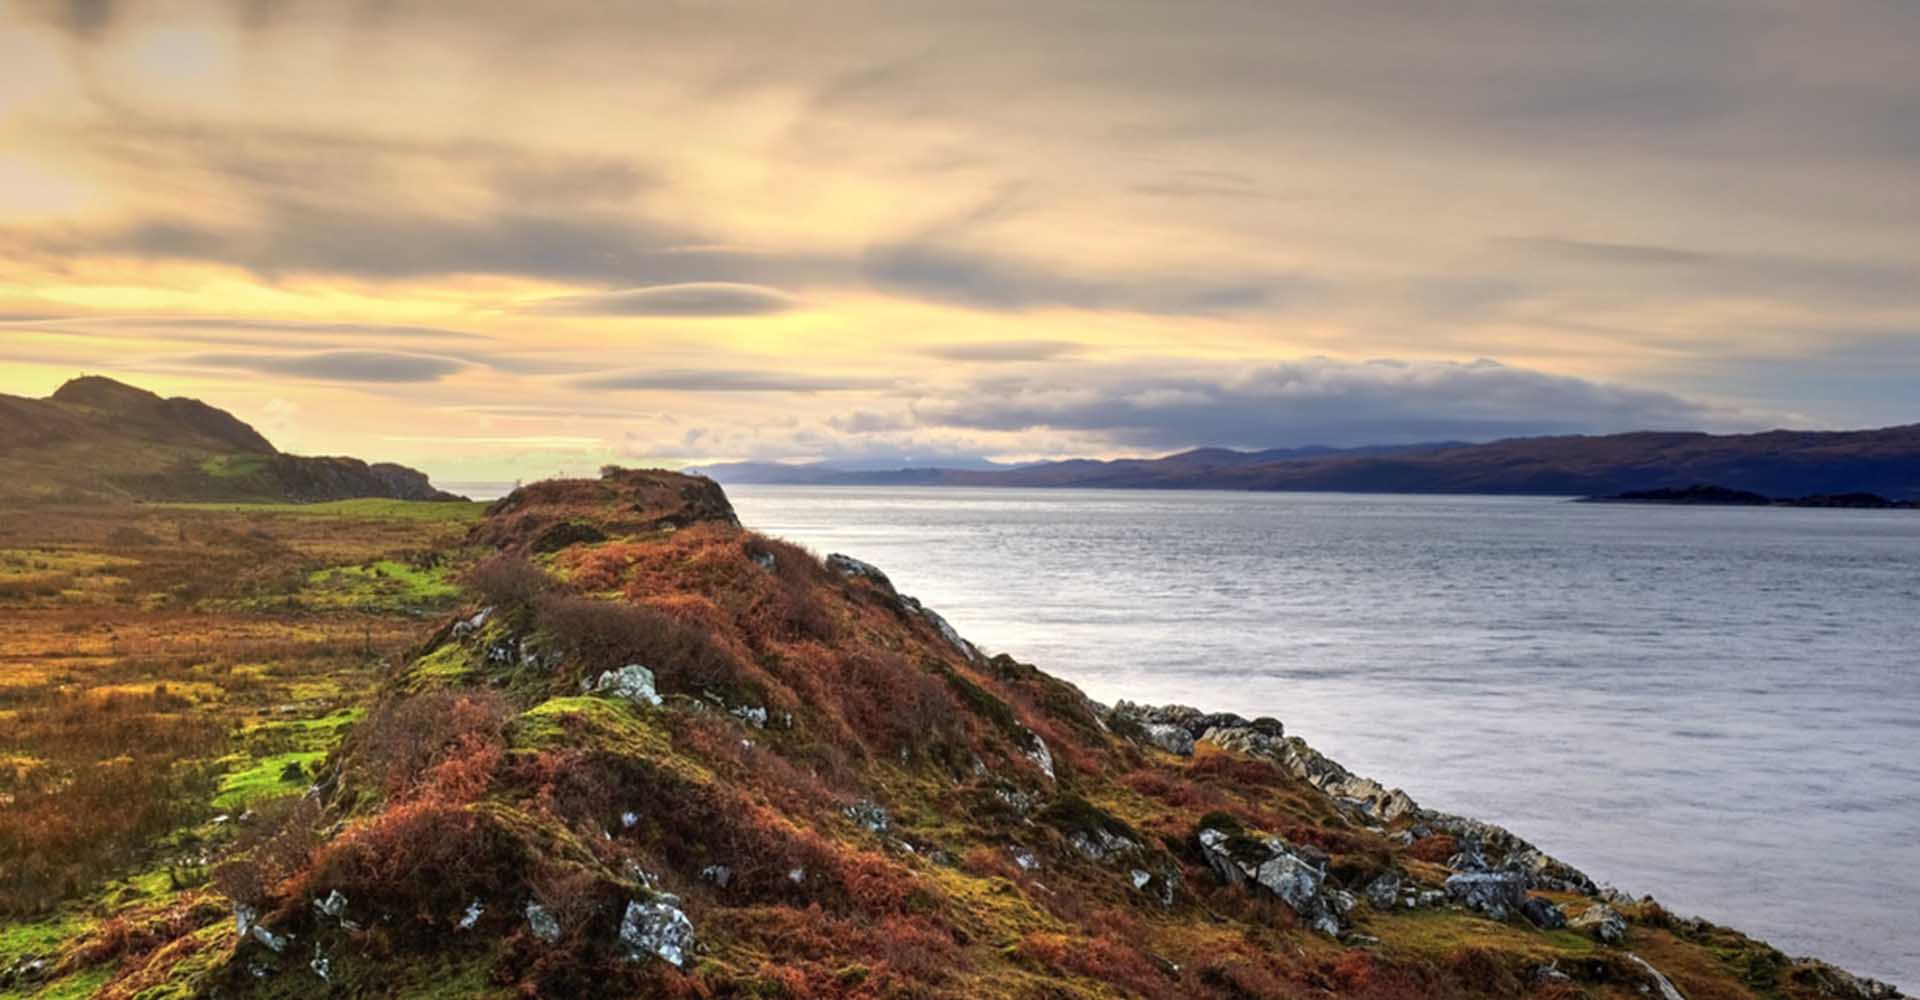 Mull of kintyre. Остров Айла Шотландия. Мыс Кинтайр. Остров jura Шотландия. Дикая Шотландия. Гебридские острова.Wild Scotland: the Western Isles (2013).